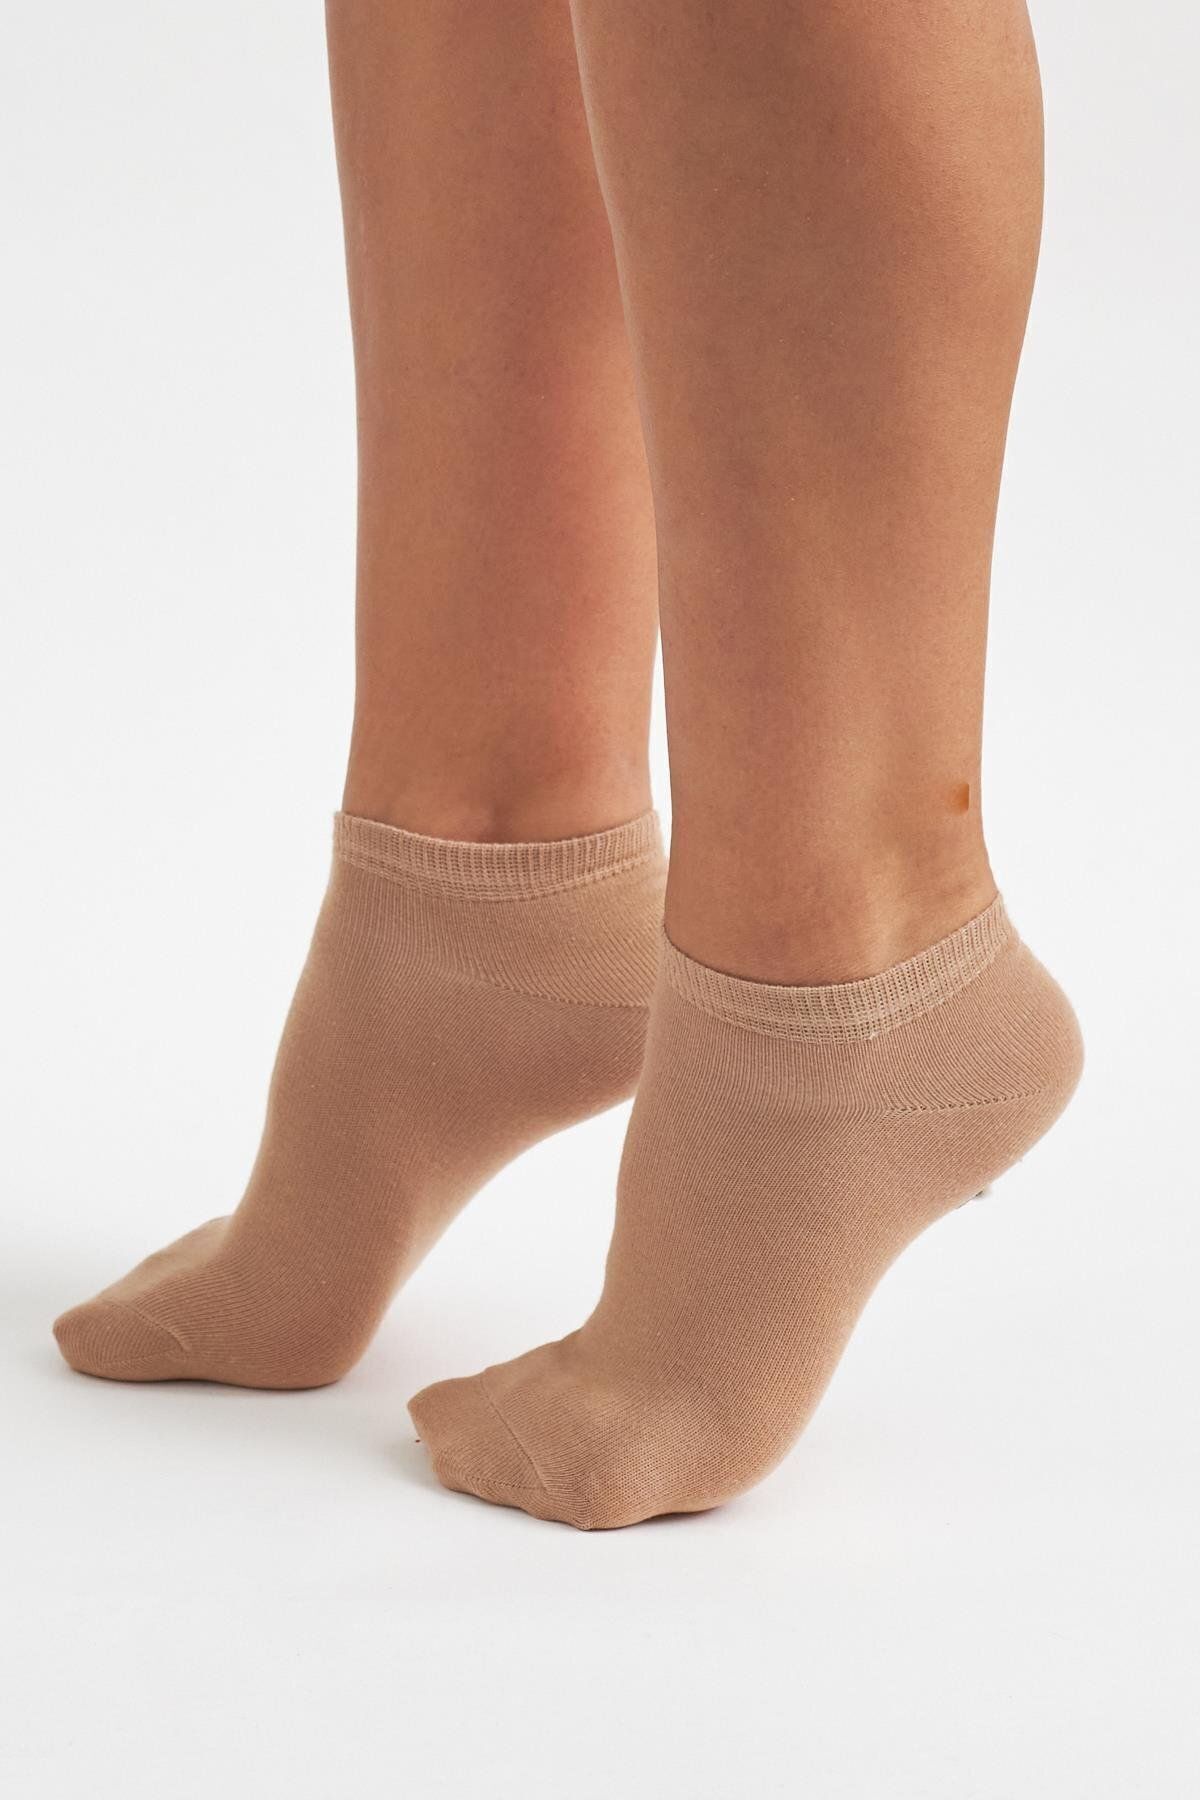 Katia & Bony Kadın Pamuklu Patik Çorap Kahverengi